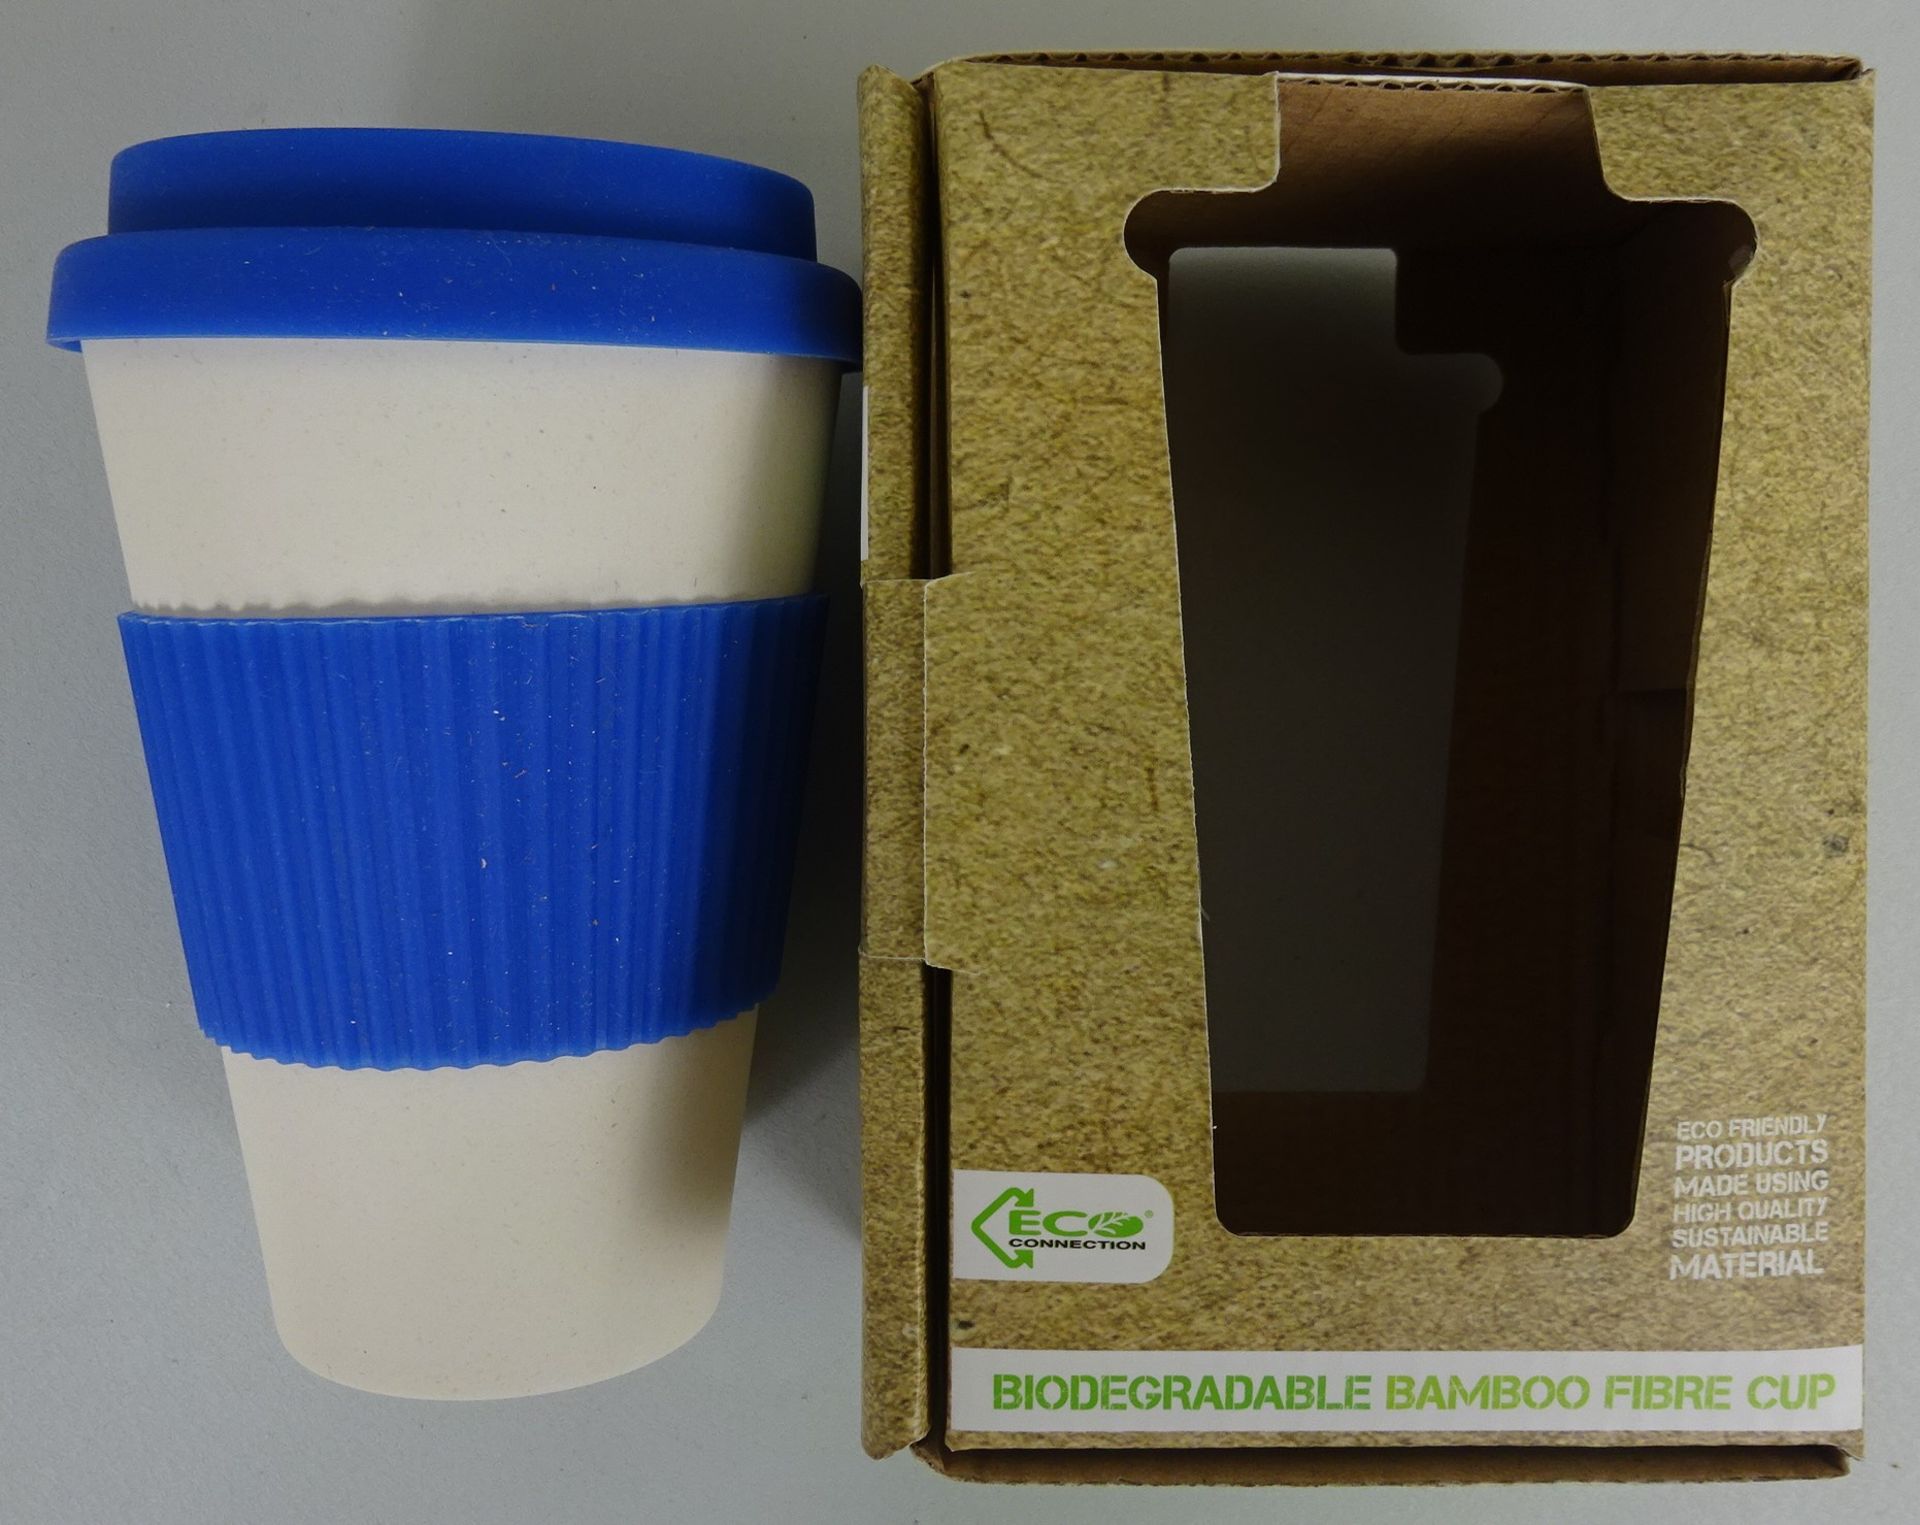 Blue Biodegradable Bamboo Fibre Cup